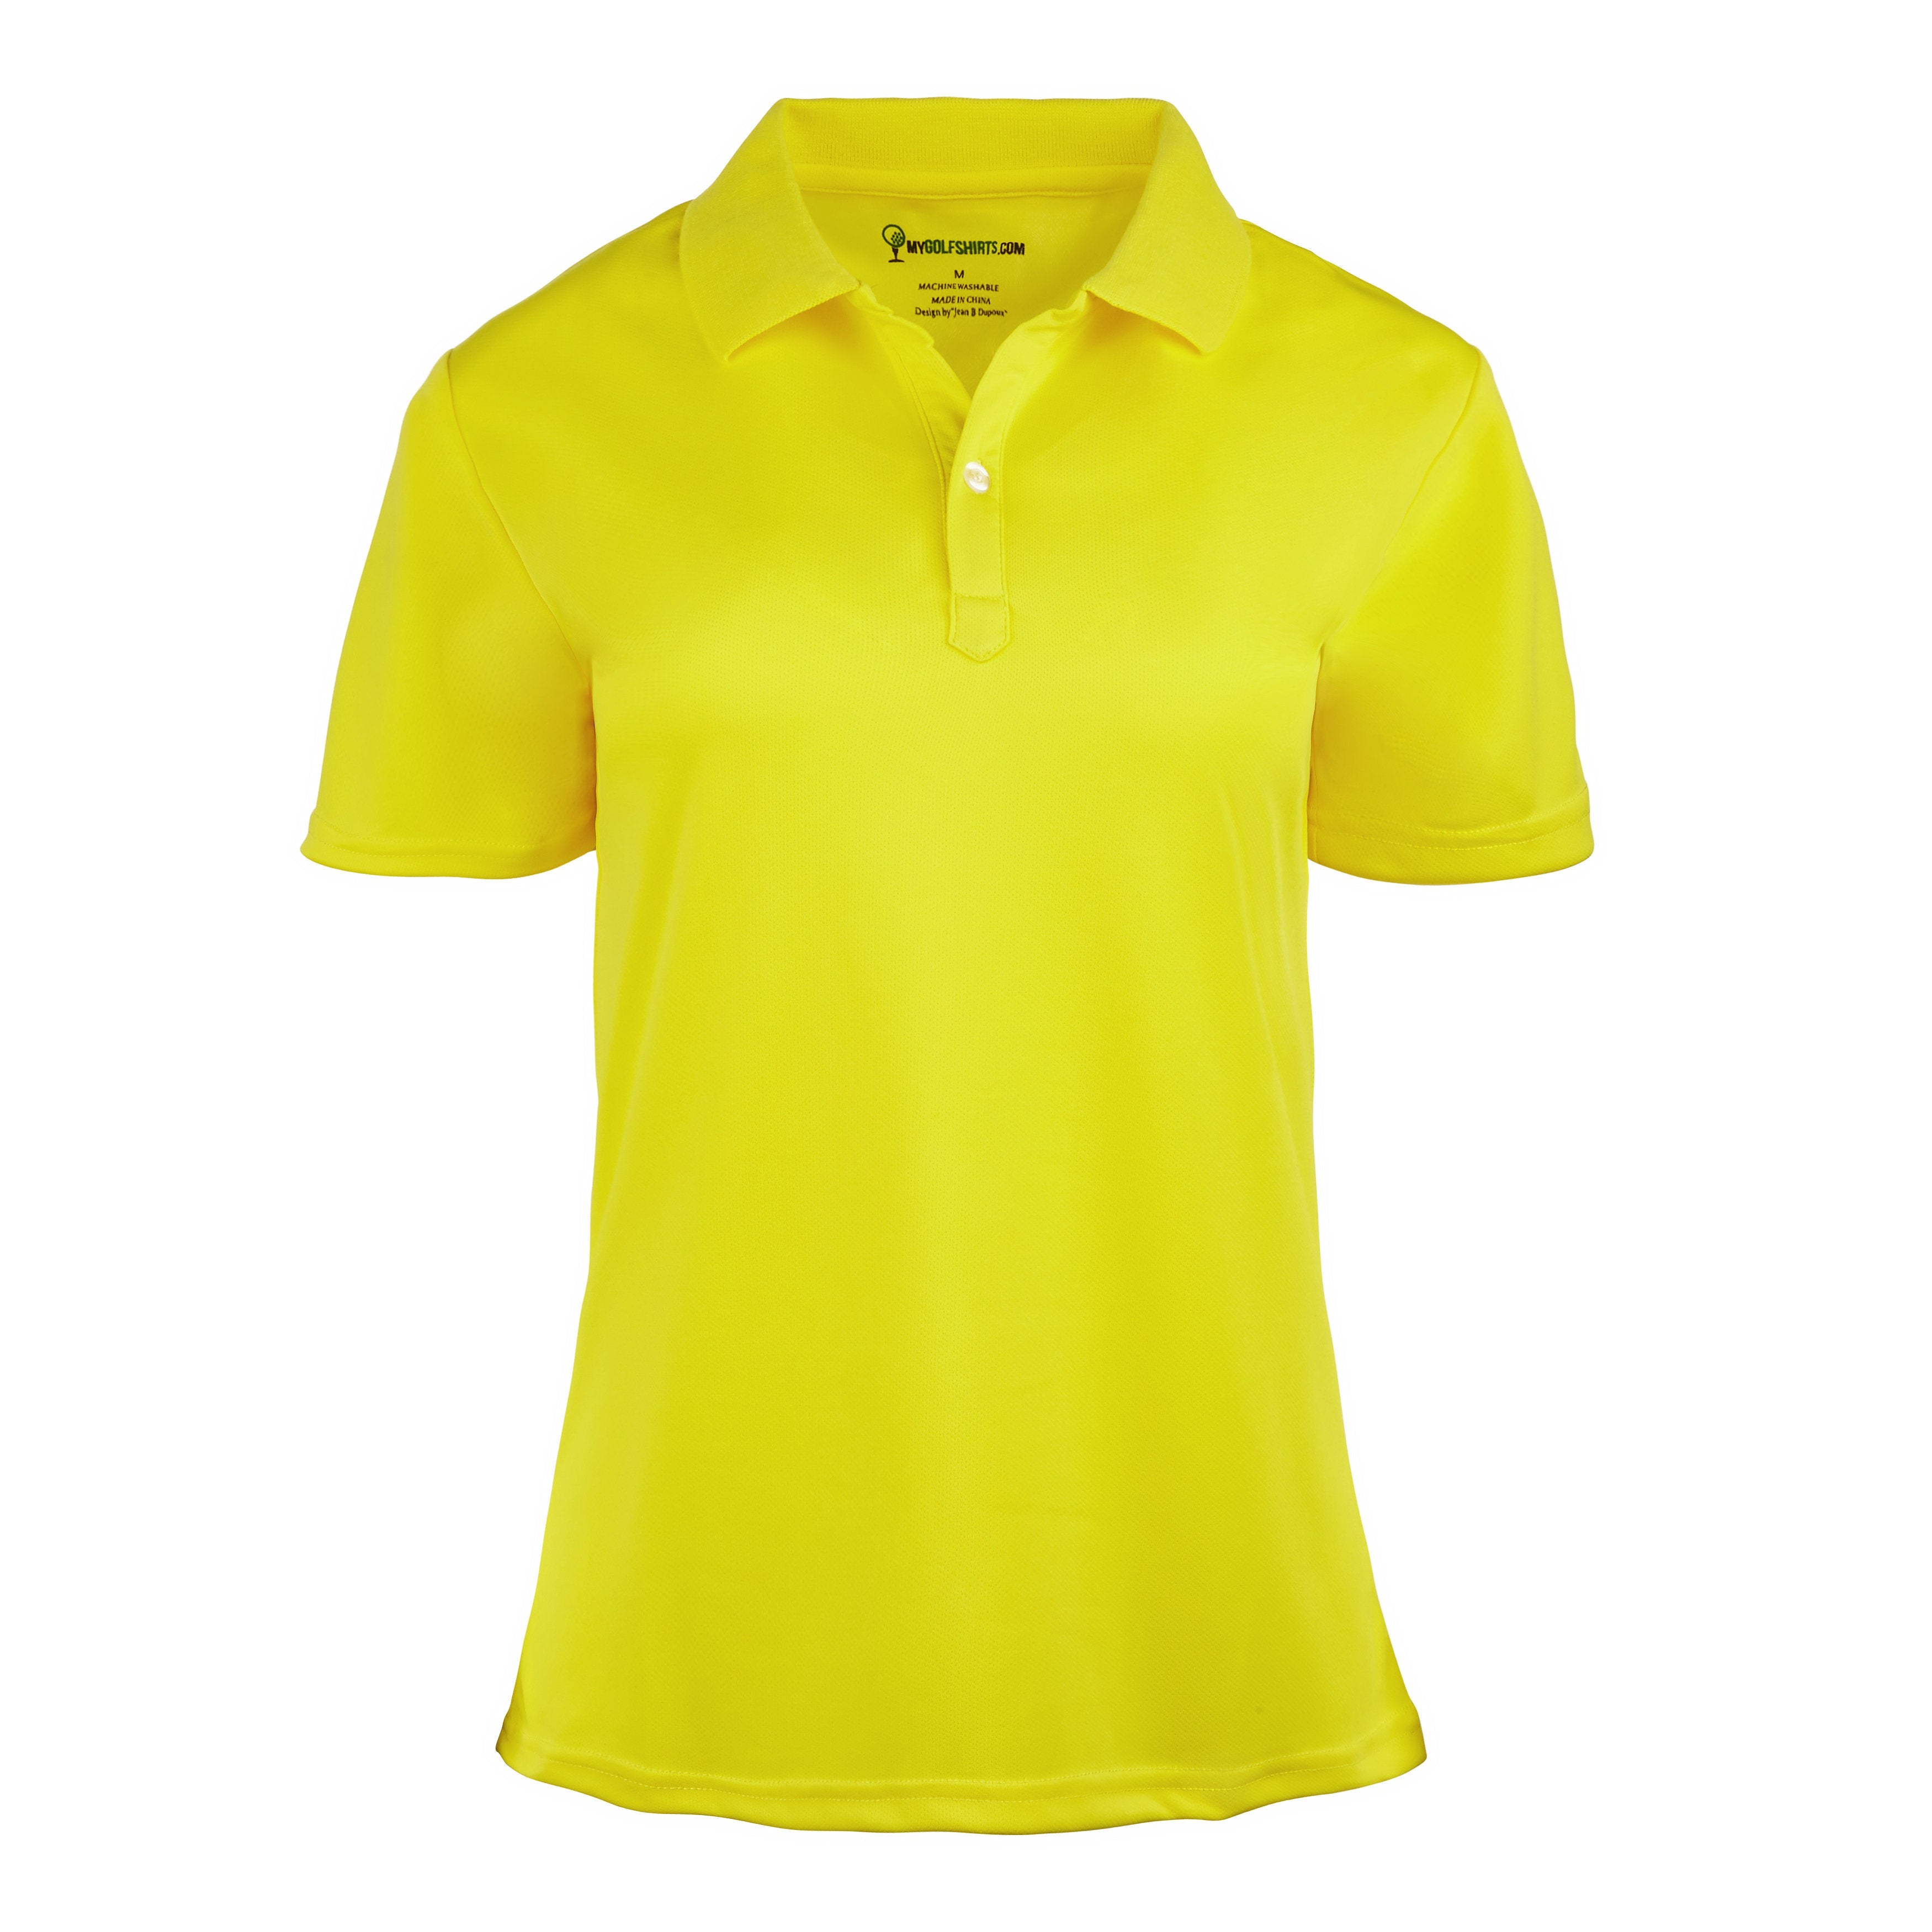 Women's golf shirts on sale